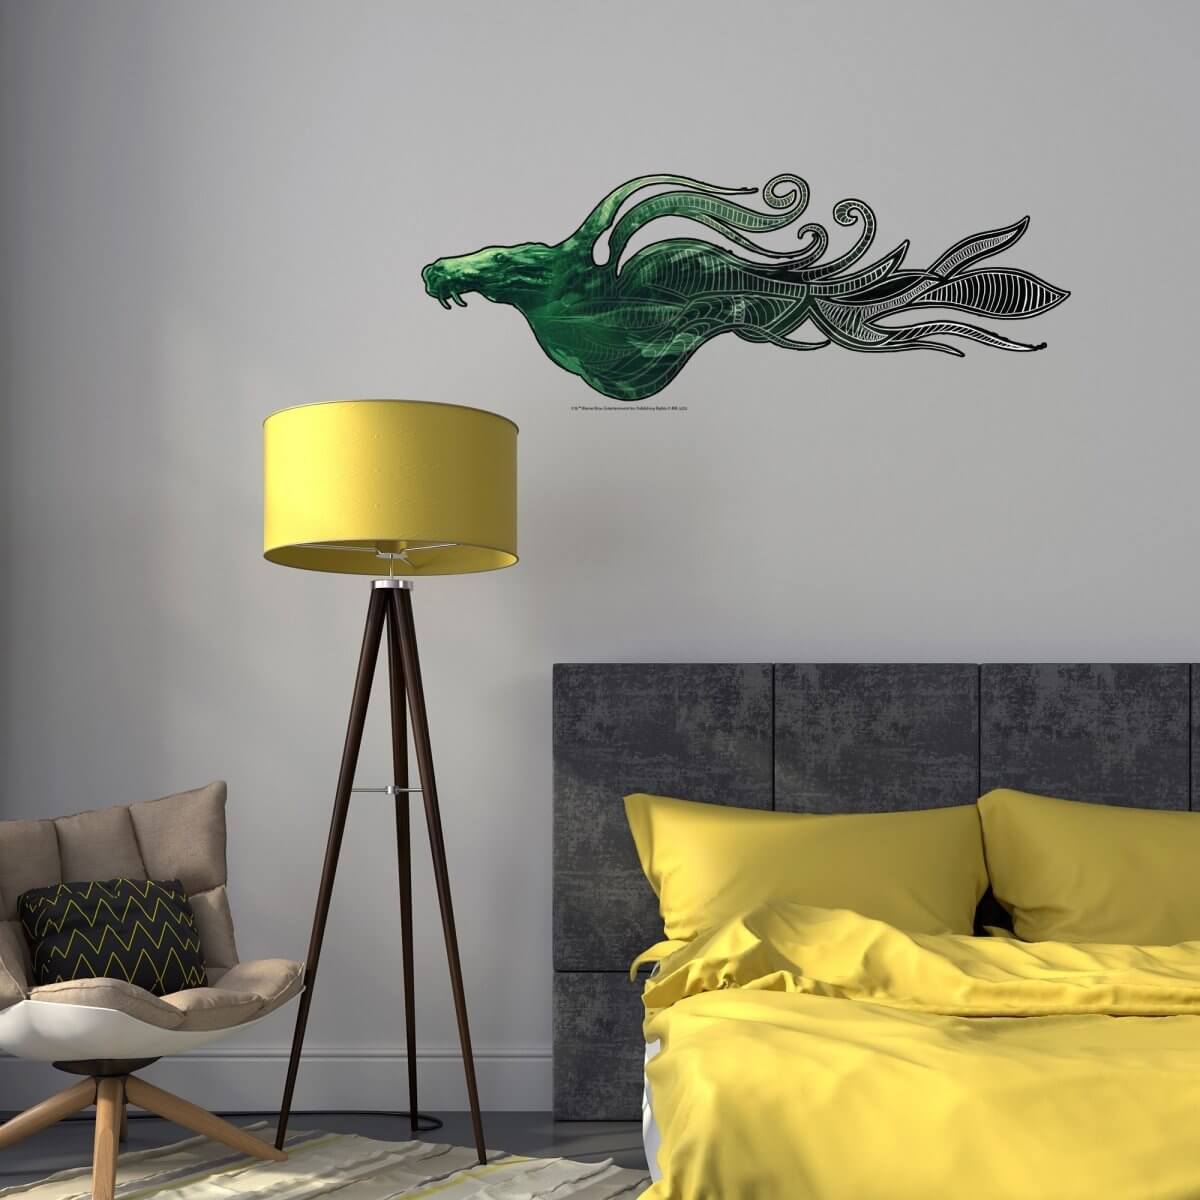 Kismet Decals Fantastic Beasts Kelpie Art Licensed Wall Sticker - Easy DIY Home & Kids Room Decor Wall Decal Art - Kismet Decals